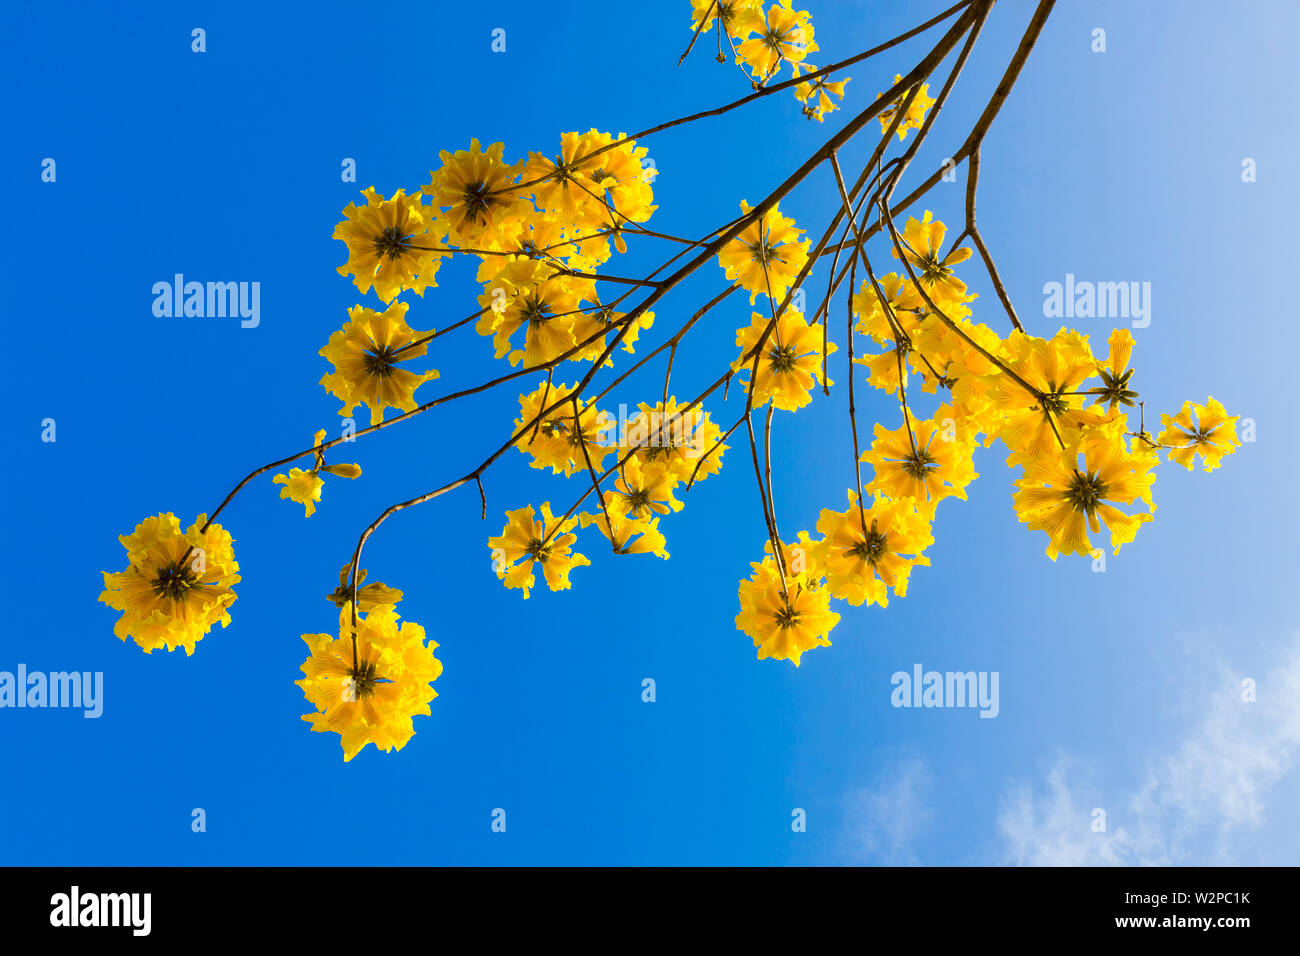 Yellow tabebuia flowers blossom on the blue sky background,Fuzhou,China Stock Photo